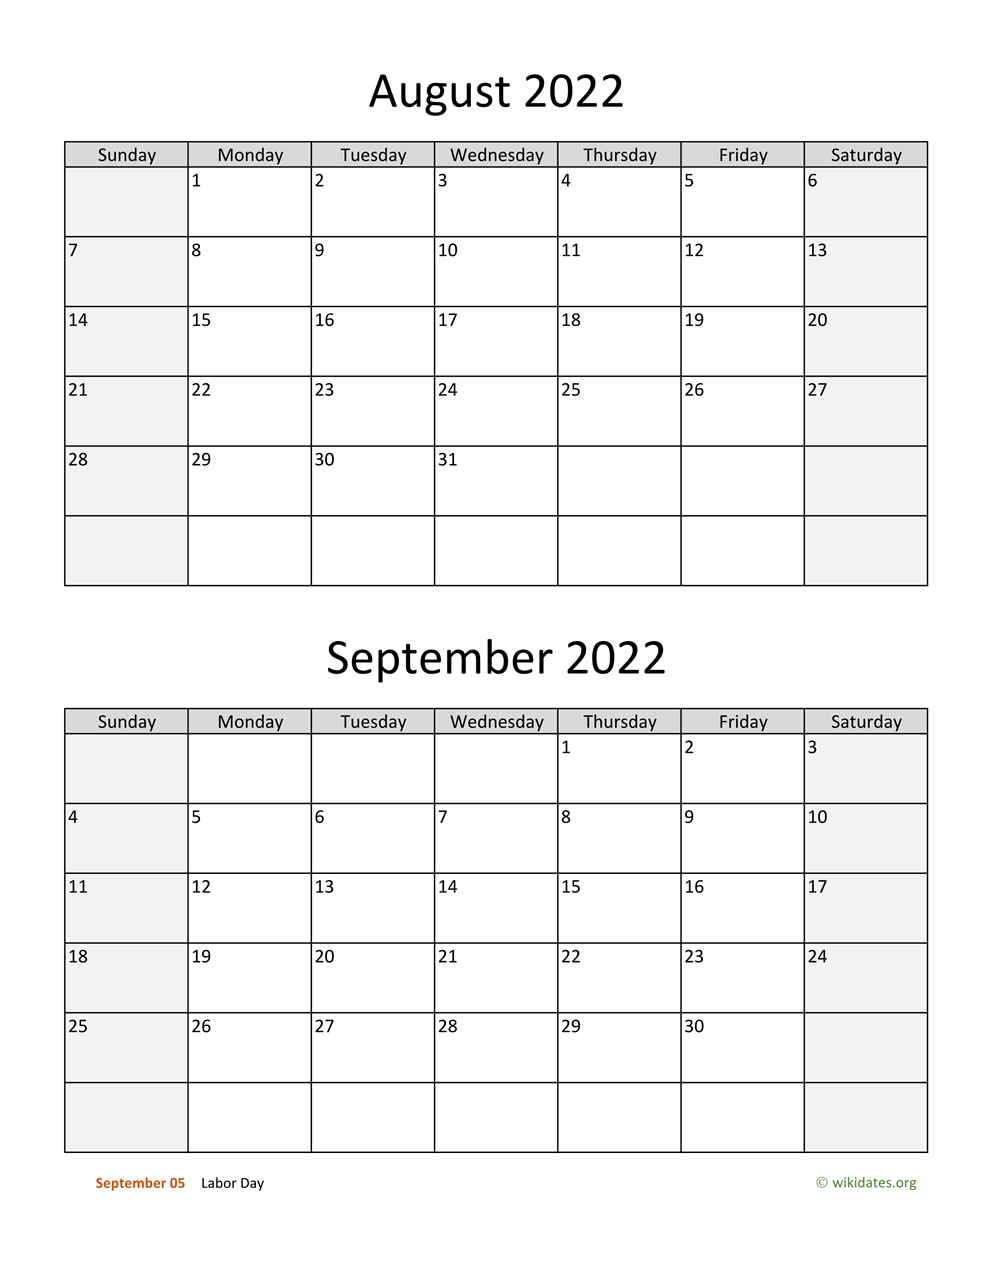 June July August September 2022 Calendar August And September 2022 Calendar | Wikidates.org